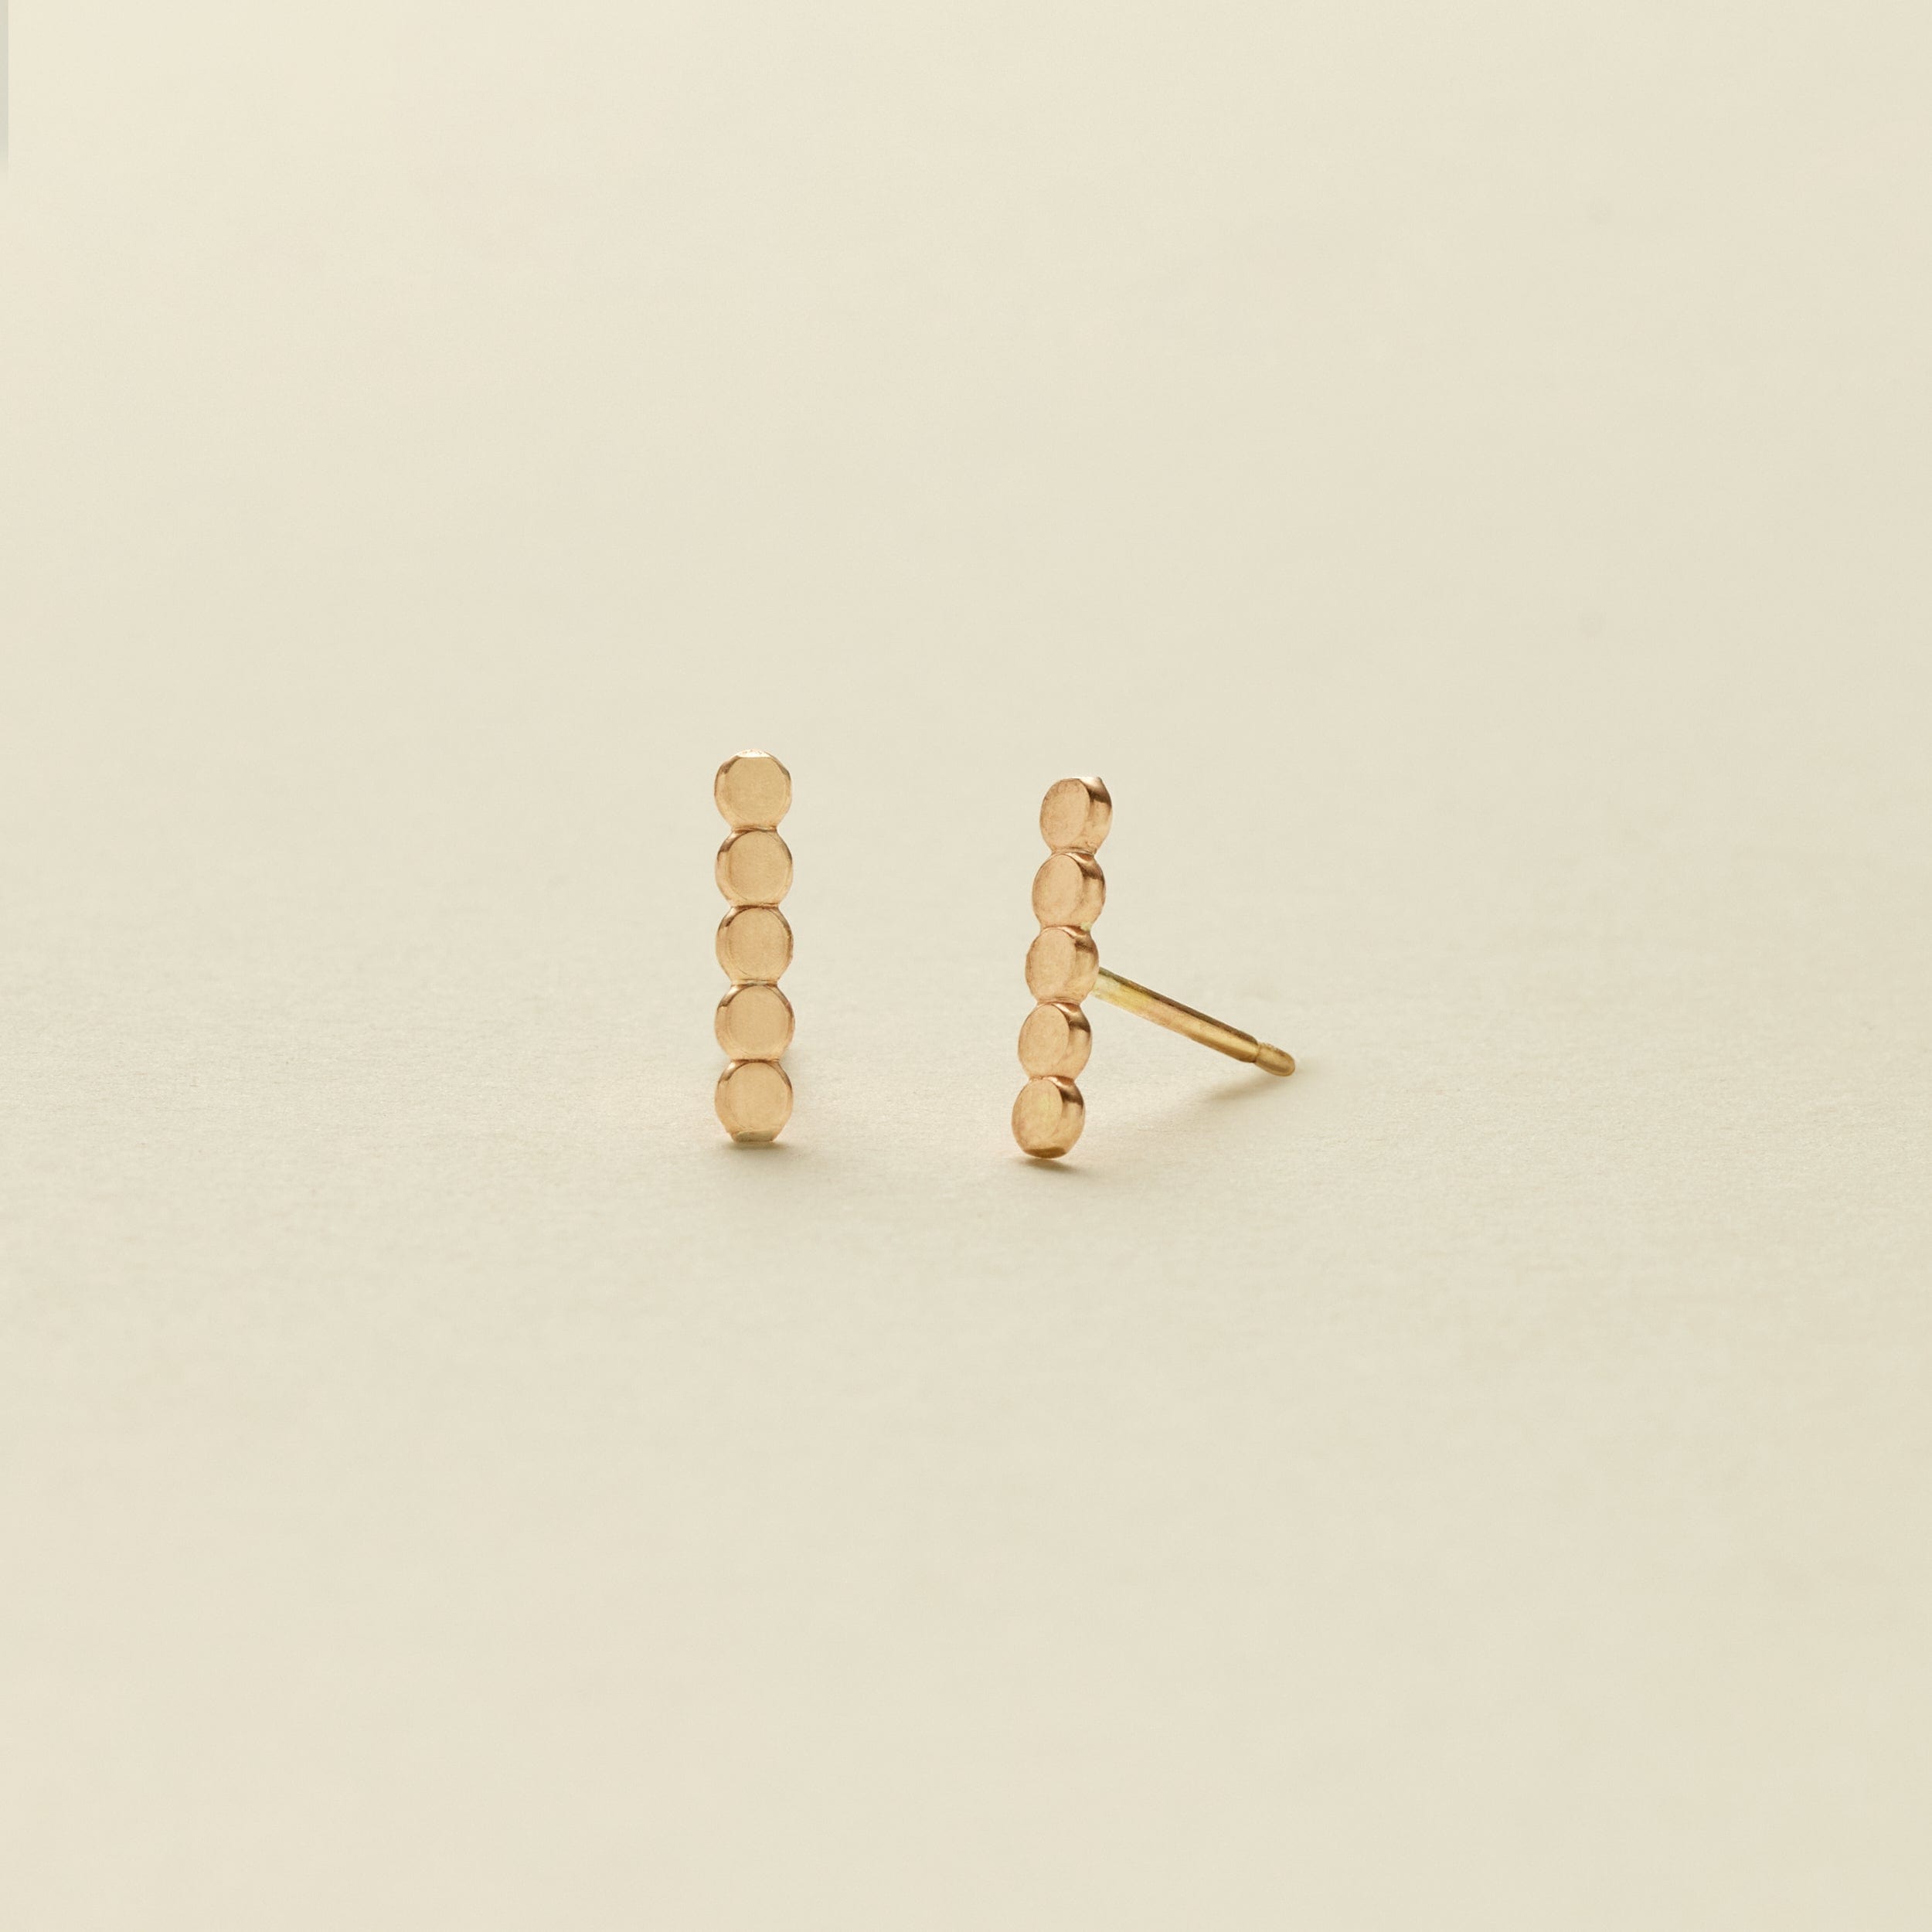 Dot Set of 4 Stud Earrings in 14K Gold Fill or Sterling 